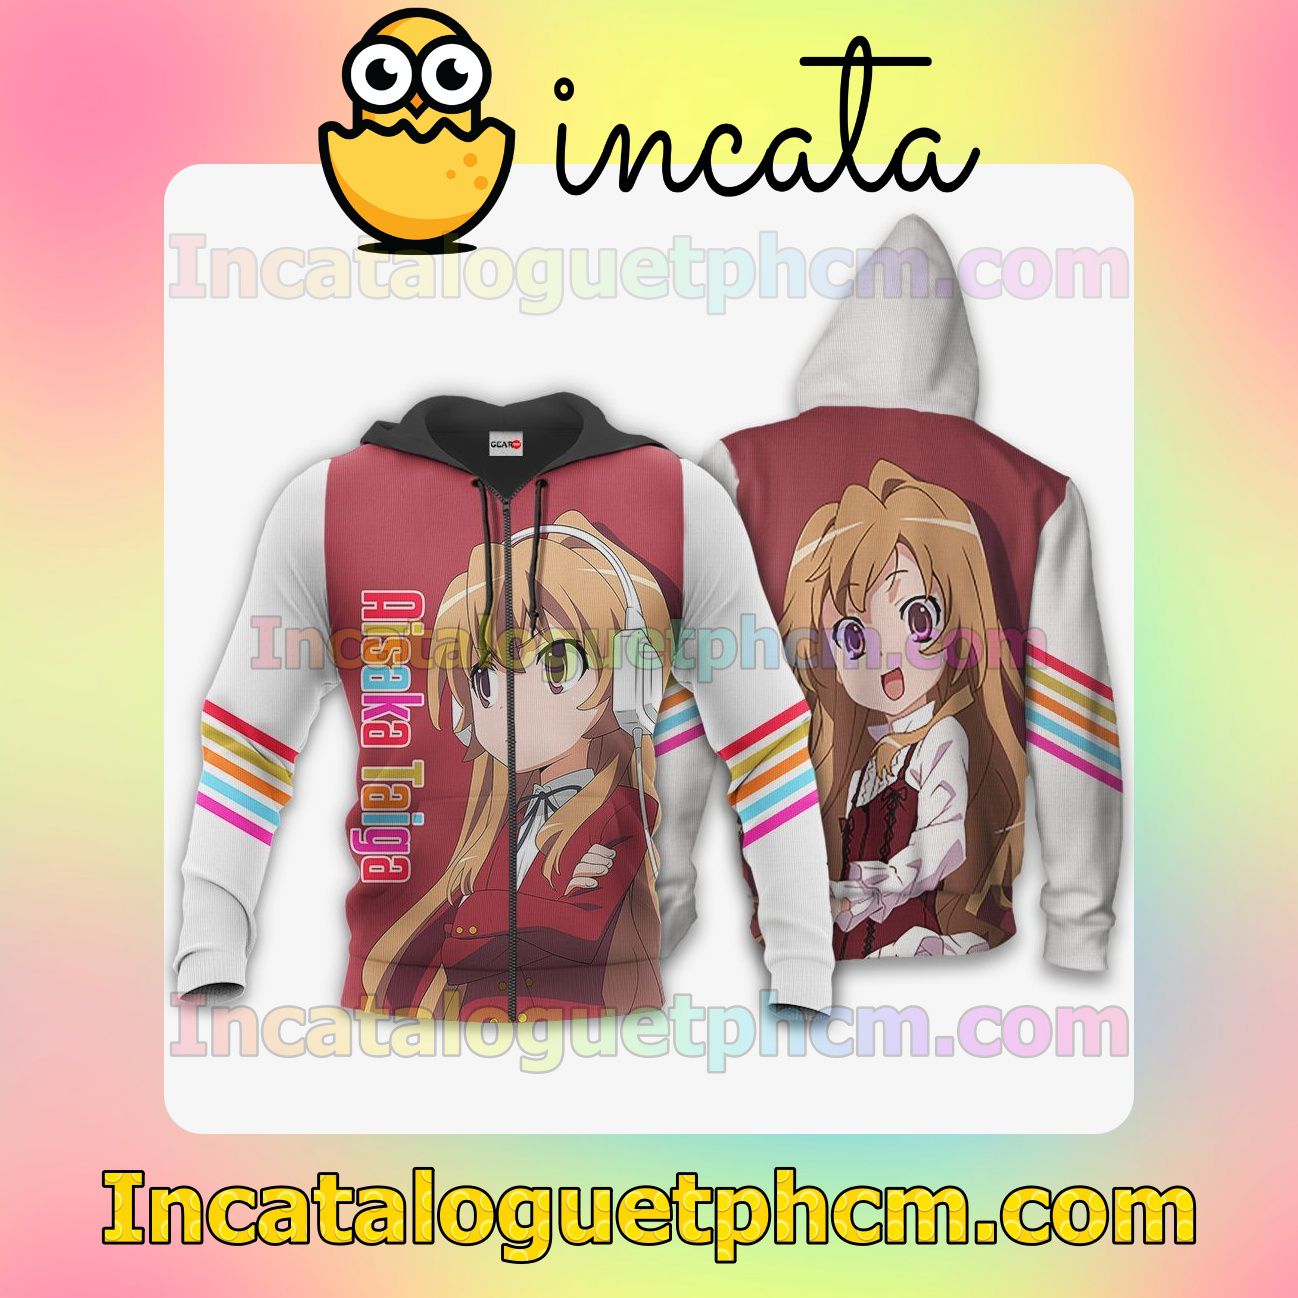 Toradora Aisaka Taiga Anime Clothing Merch Zip Hoodie Jacket Shirts